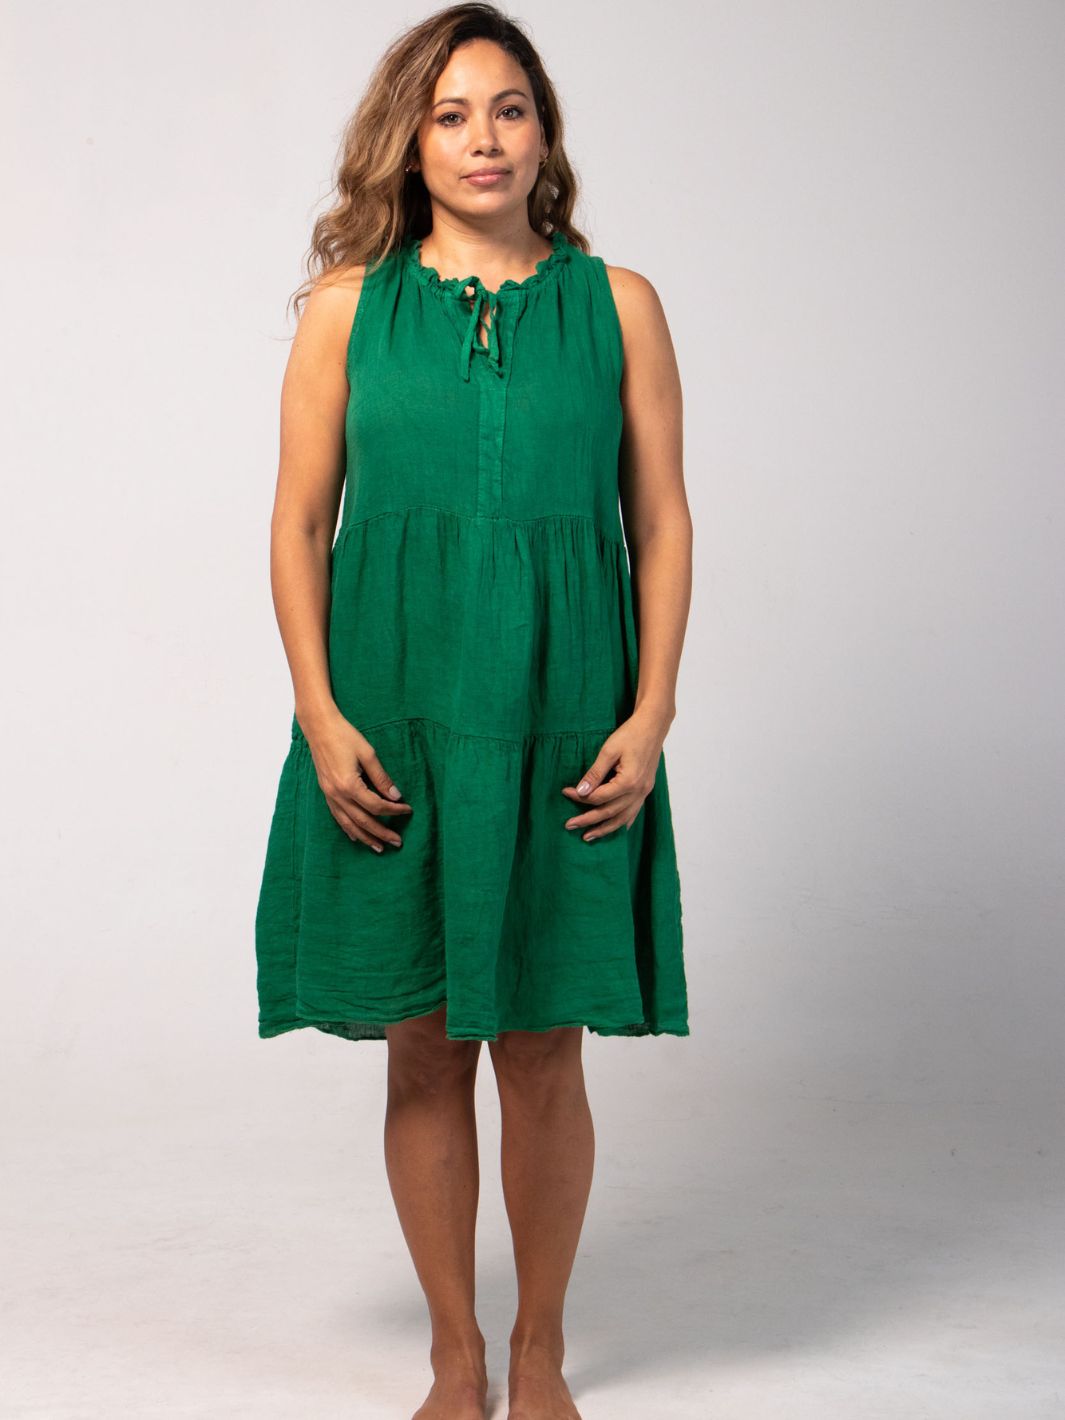 Short Sleeveless Tie Dress - Green